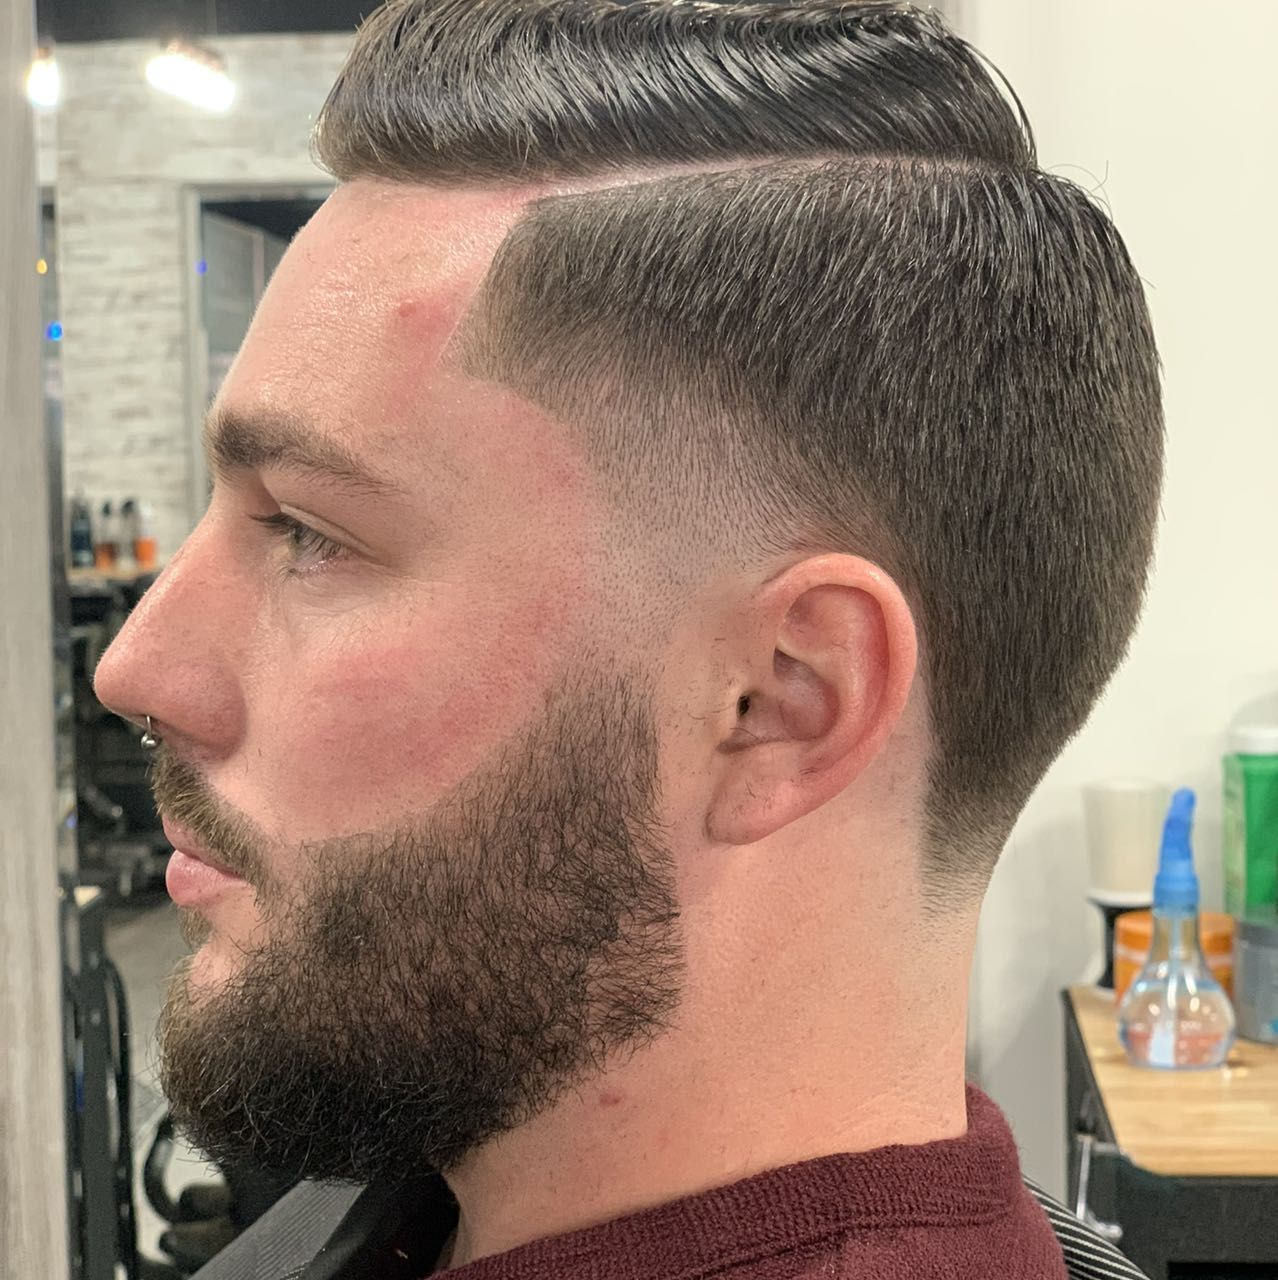 Adult hair cut with beard portfolio